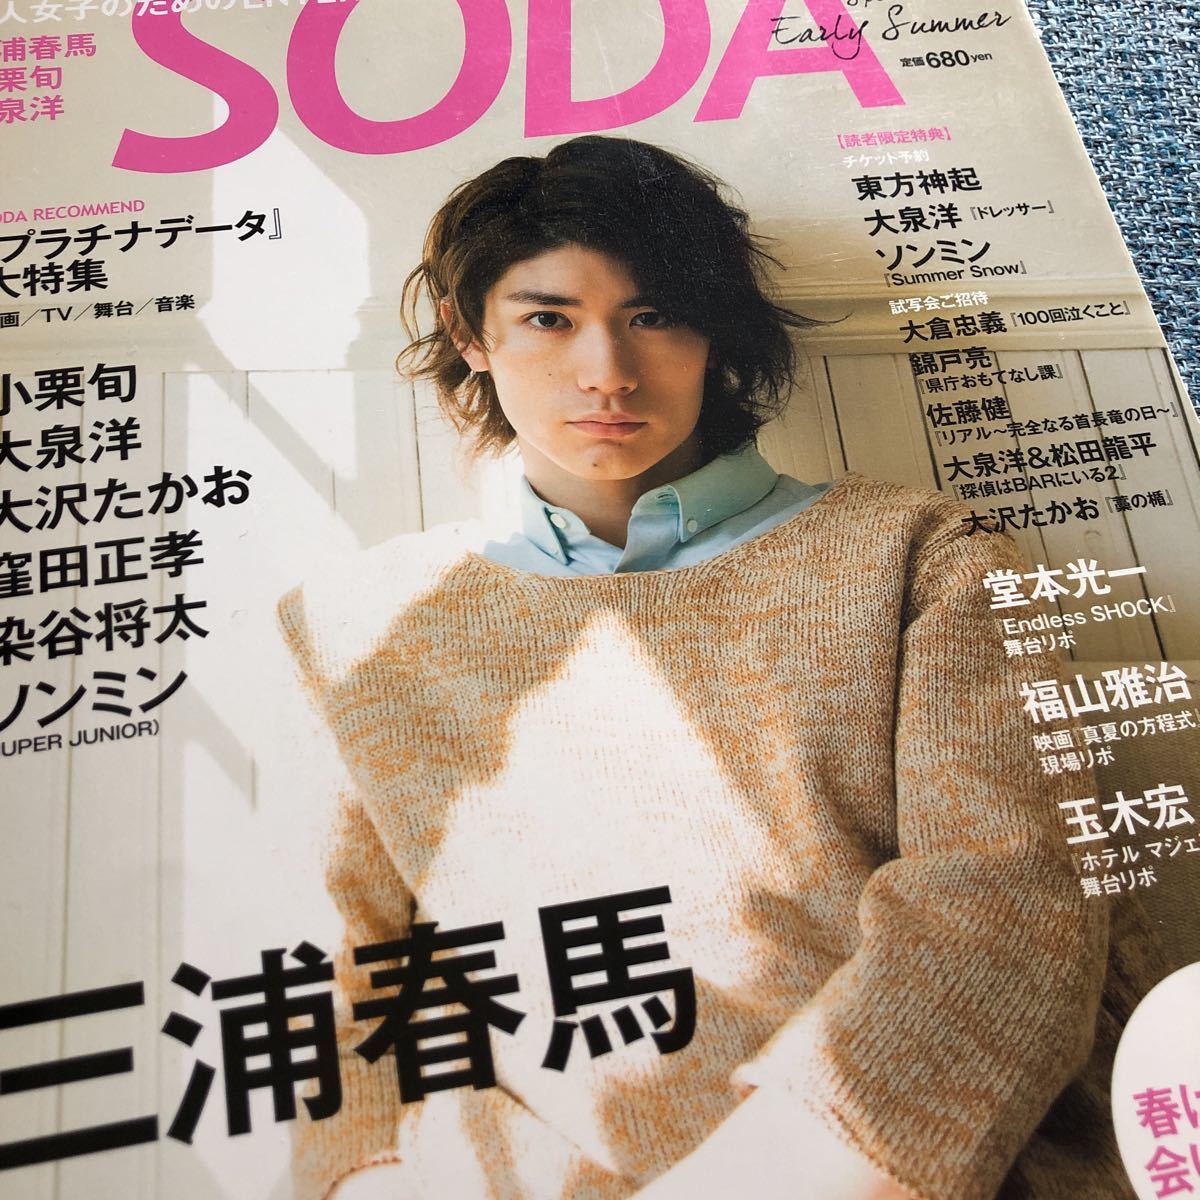 SODA Special Issue Early Summer 表紙:三浦春馬 | omergoldshtein.com